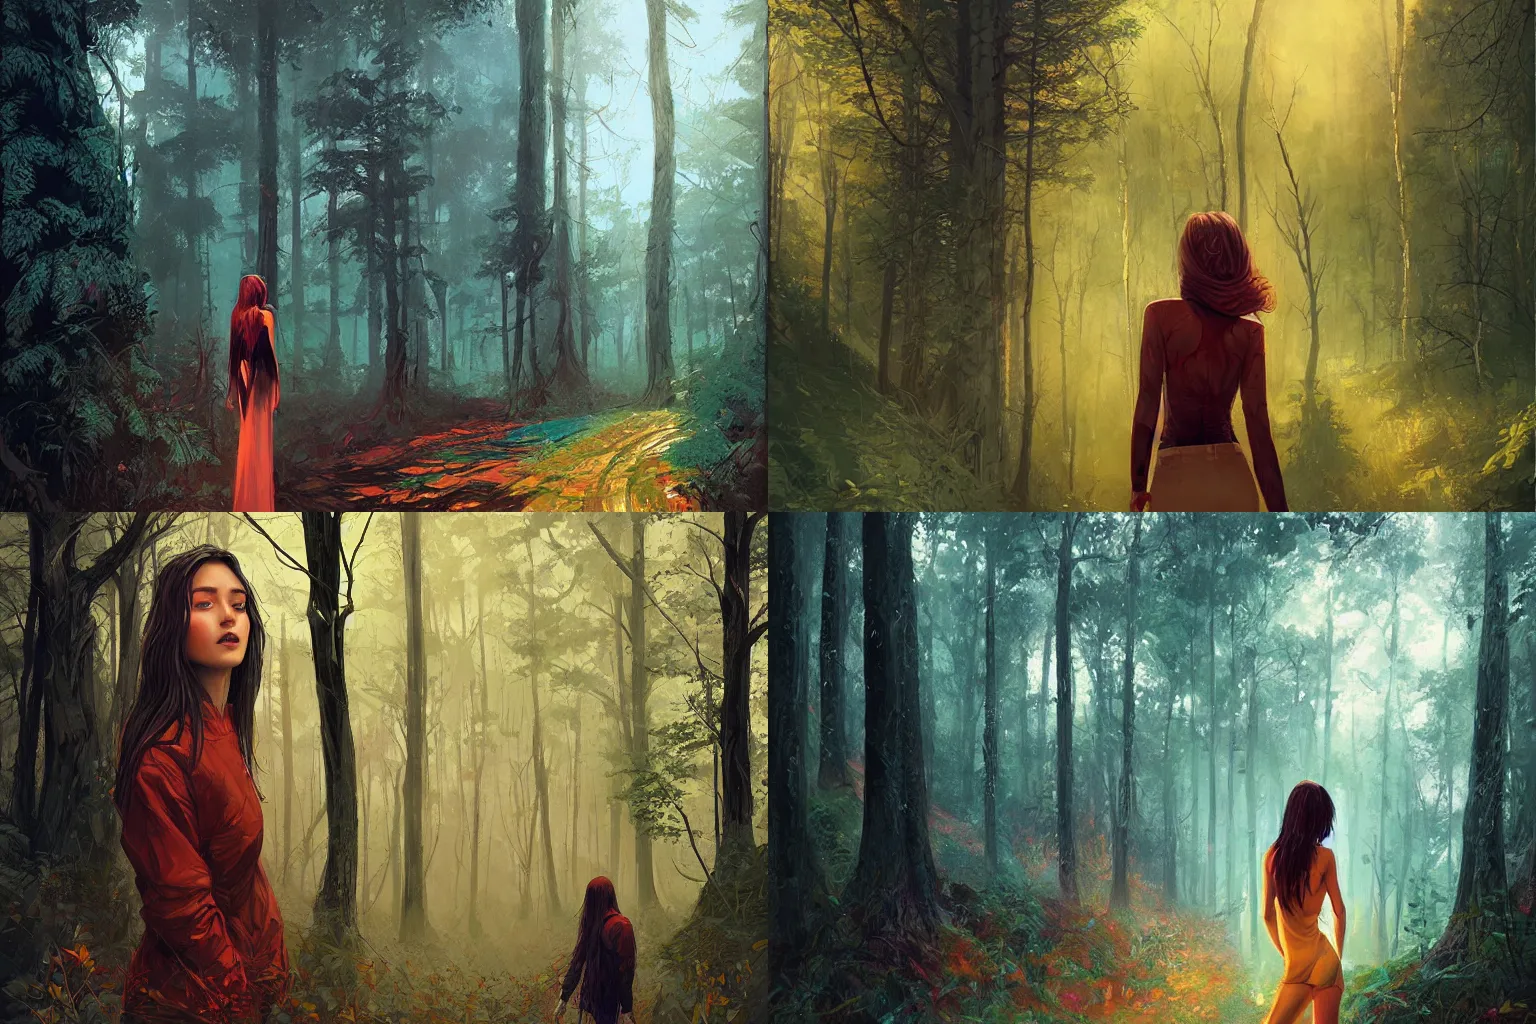 Prompt: woman drawn by artgerm, standing on a forest trail by alena aenami, digital artwork by karol bak and rhads, jason chan